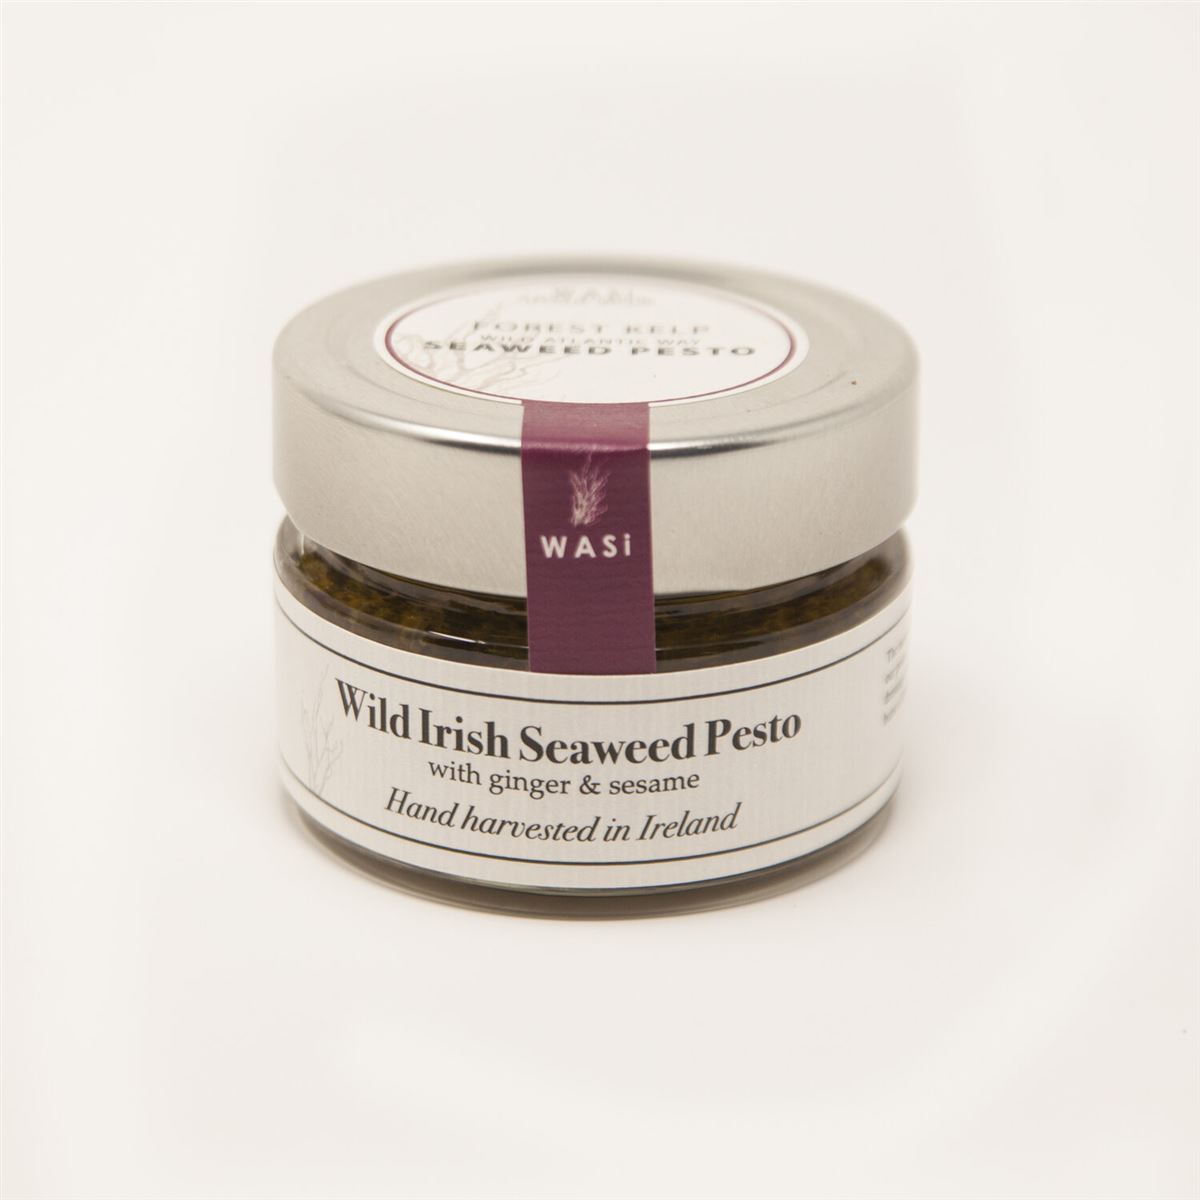 WASI Wild Irish Seaweed Pesto with Ginger & Sesame 100g